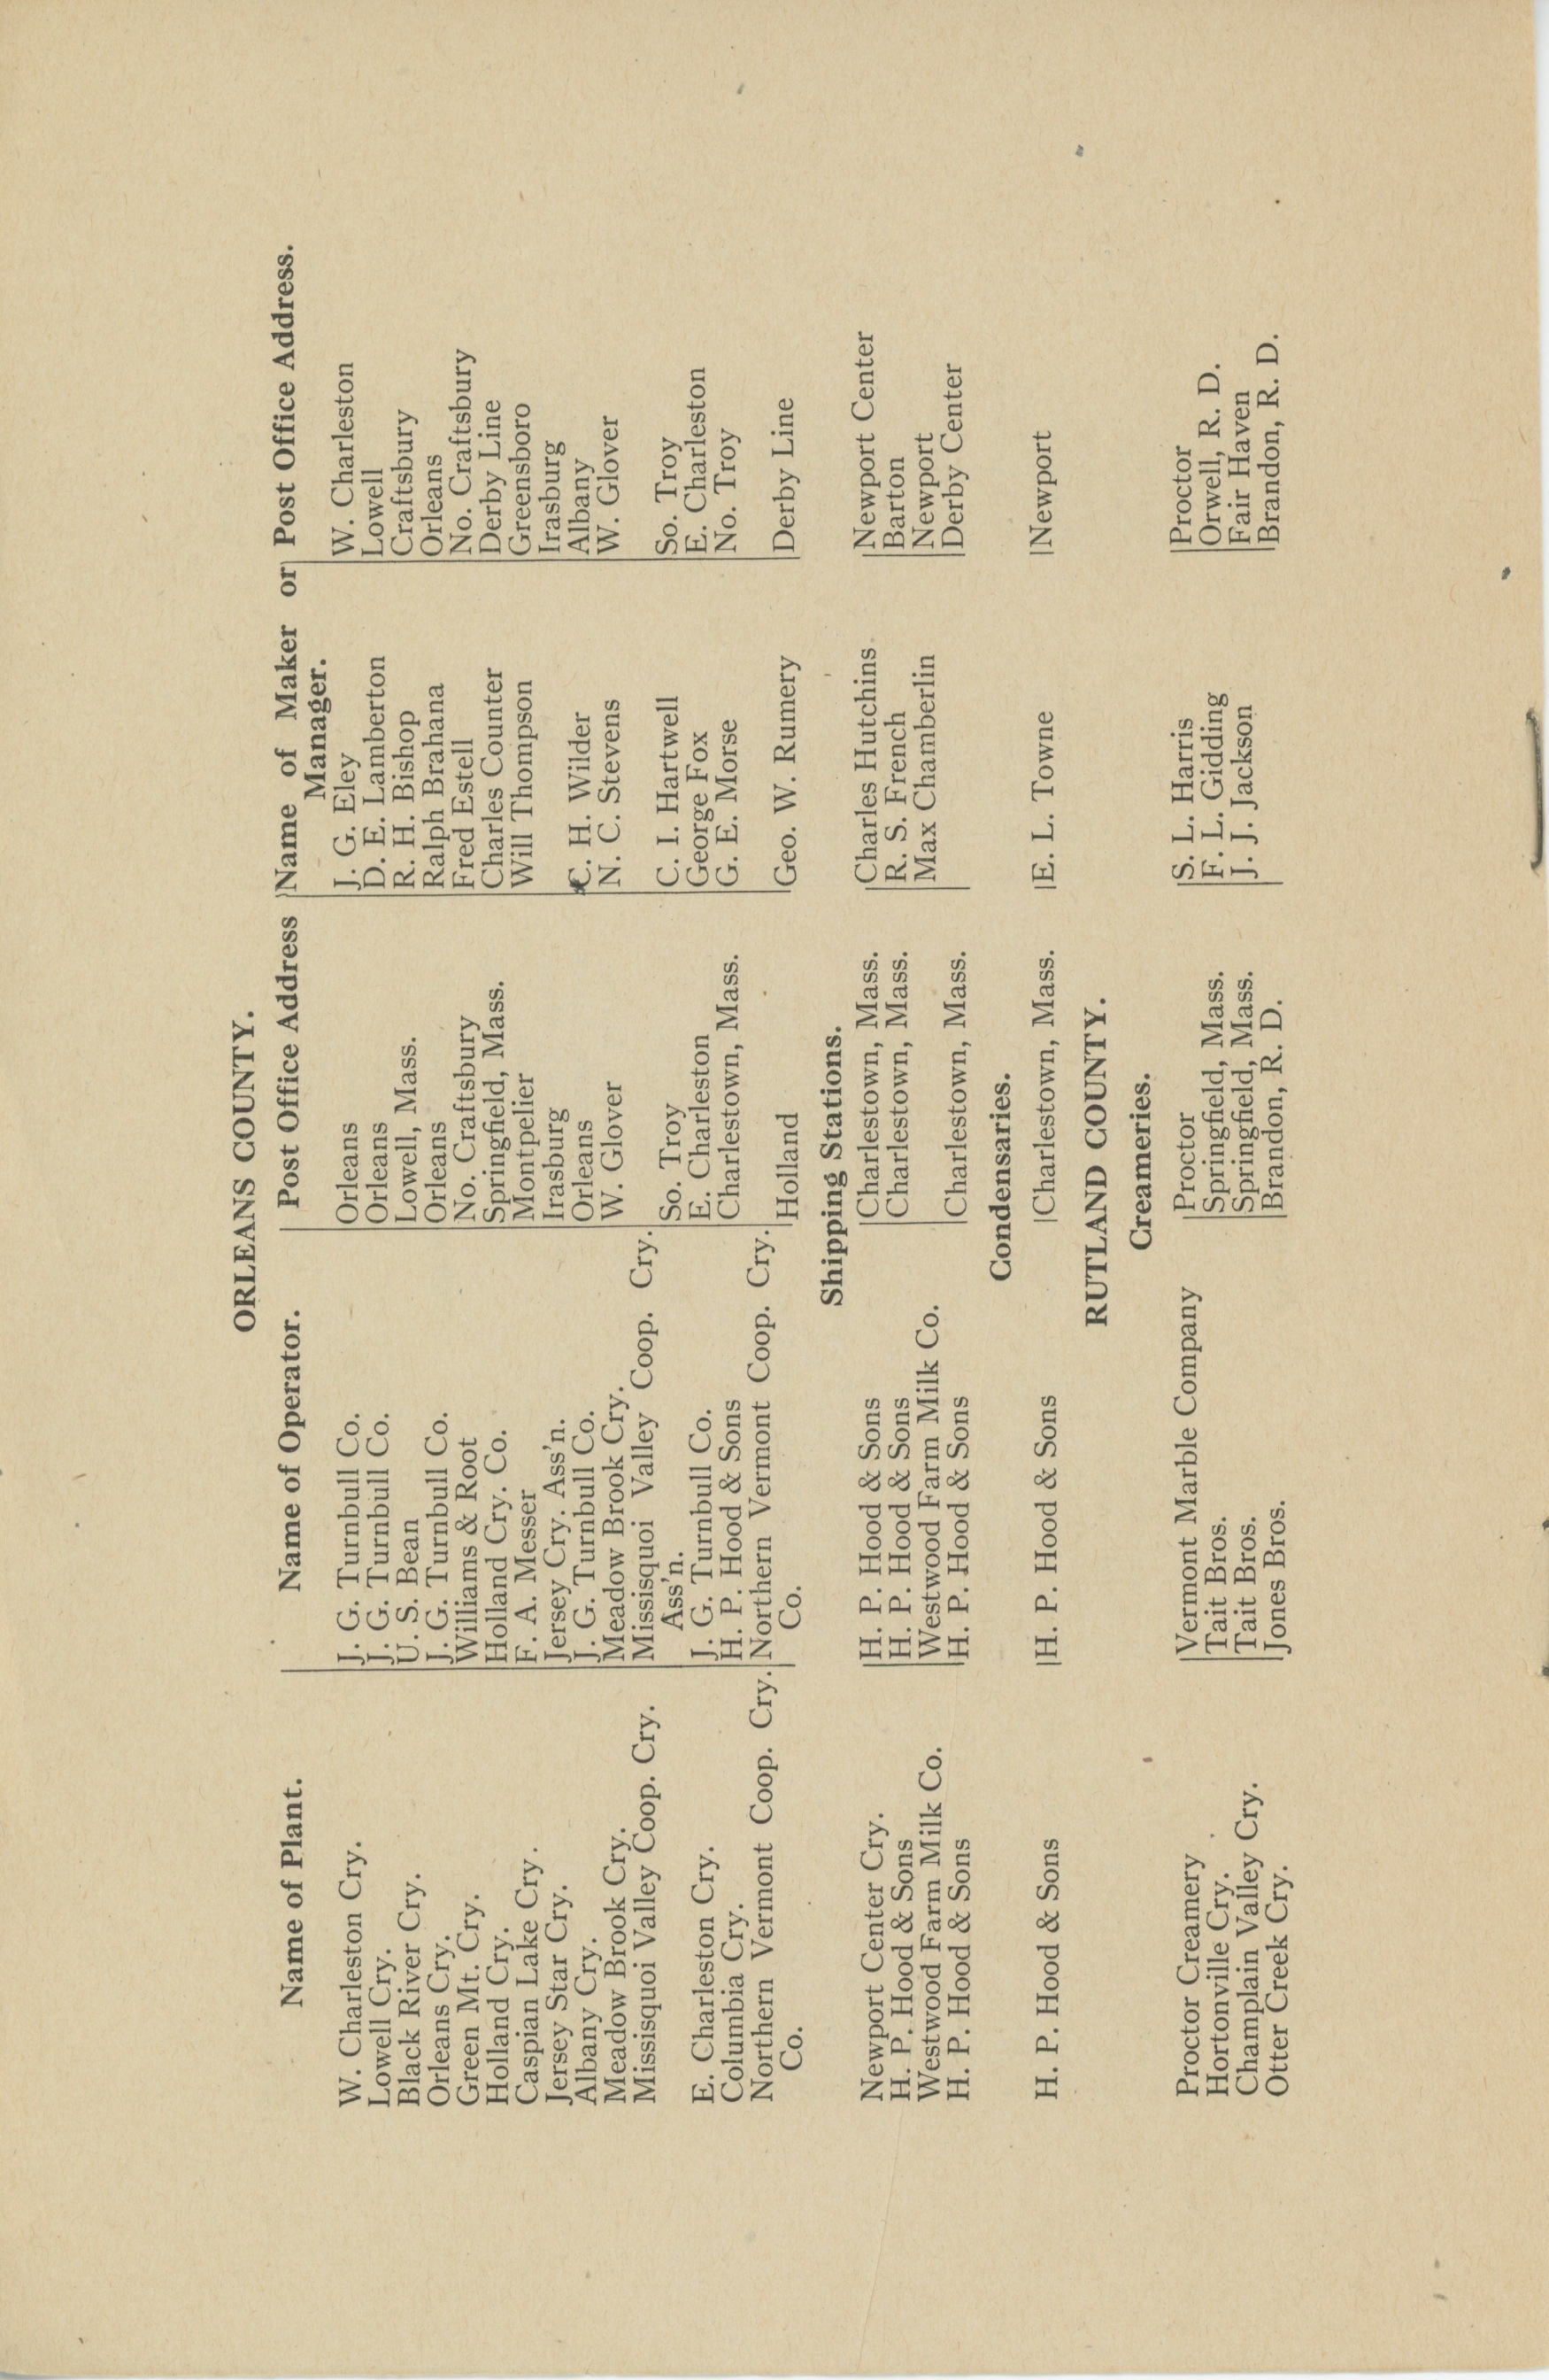 ced-1921-statedepartment-list of creameriespg7.jpeg